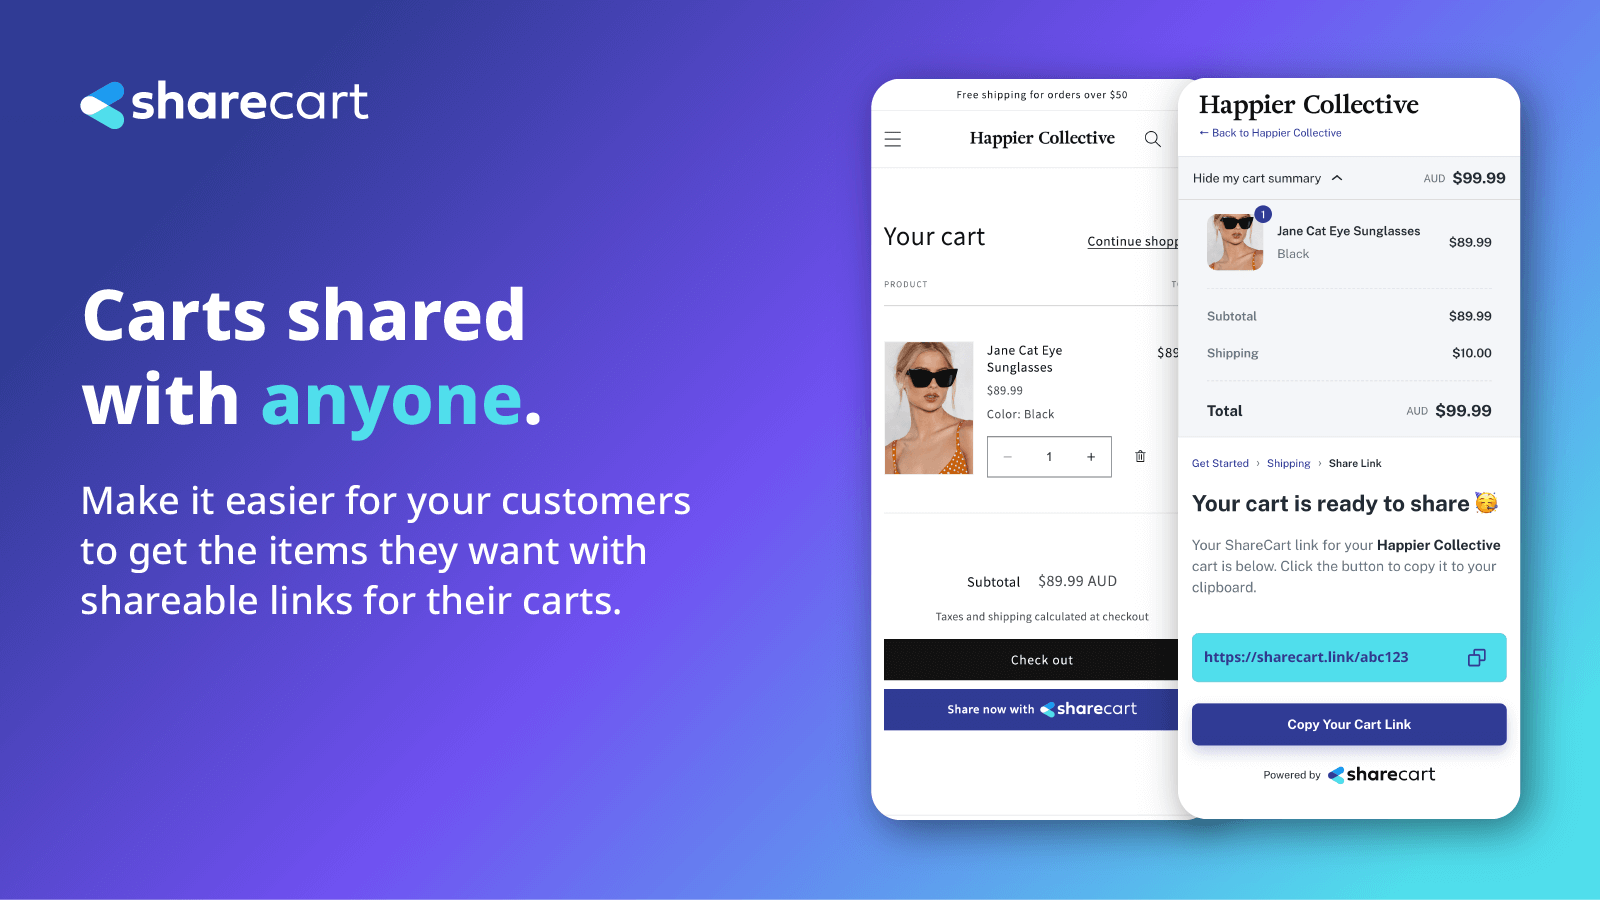 ShareCart share carts with anyone